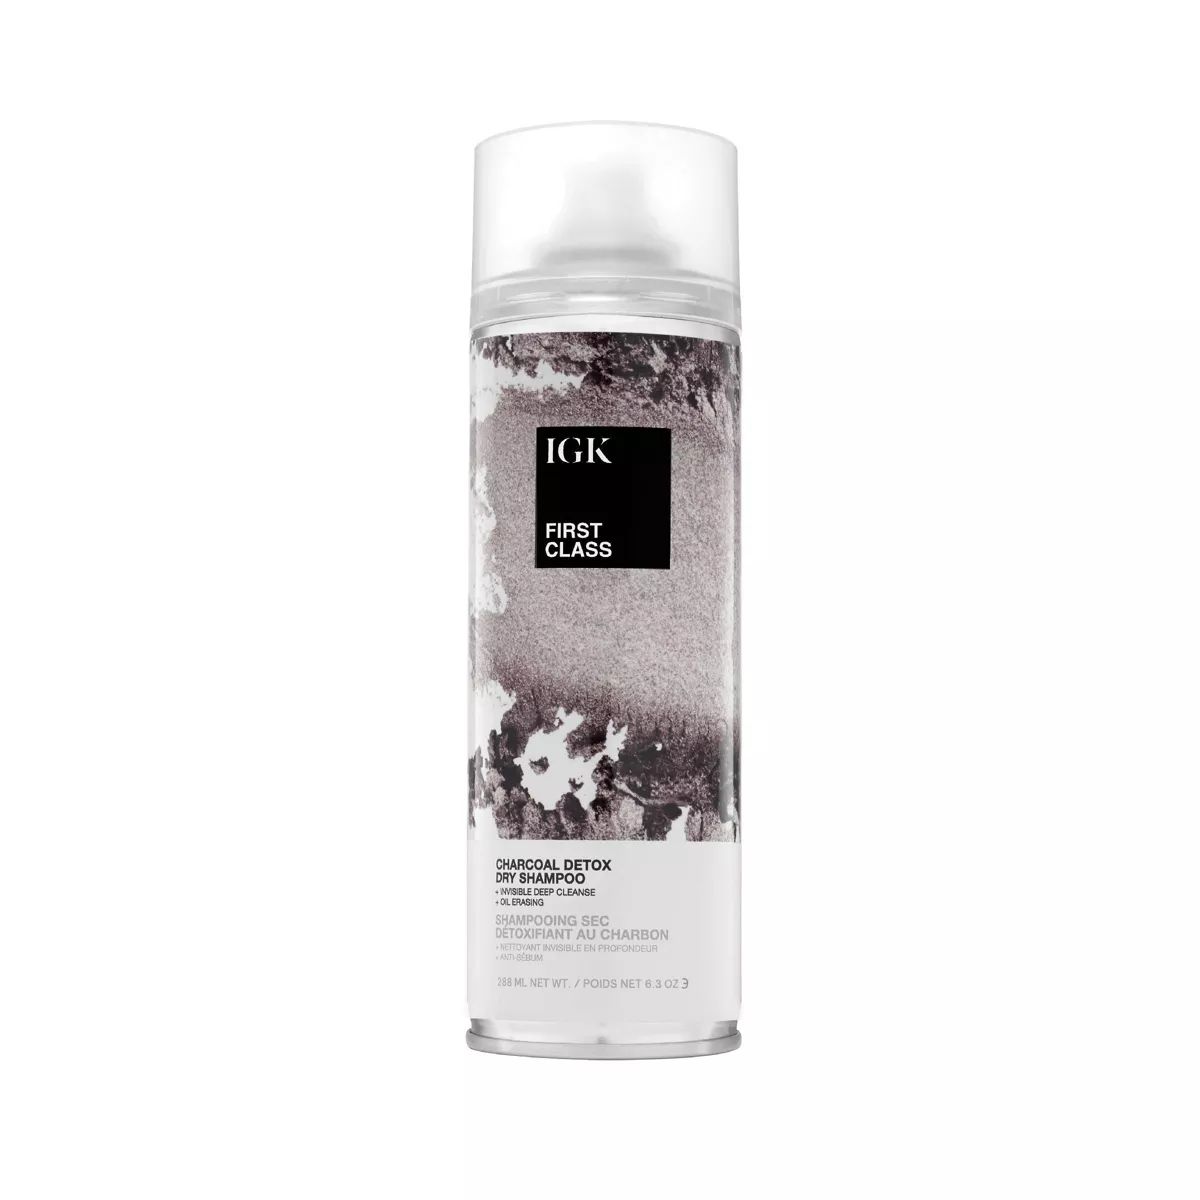 IGK First Class Charcoal Detox Dry Shampoo - Ulta Beauty | Target